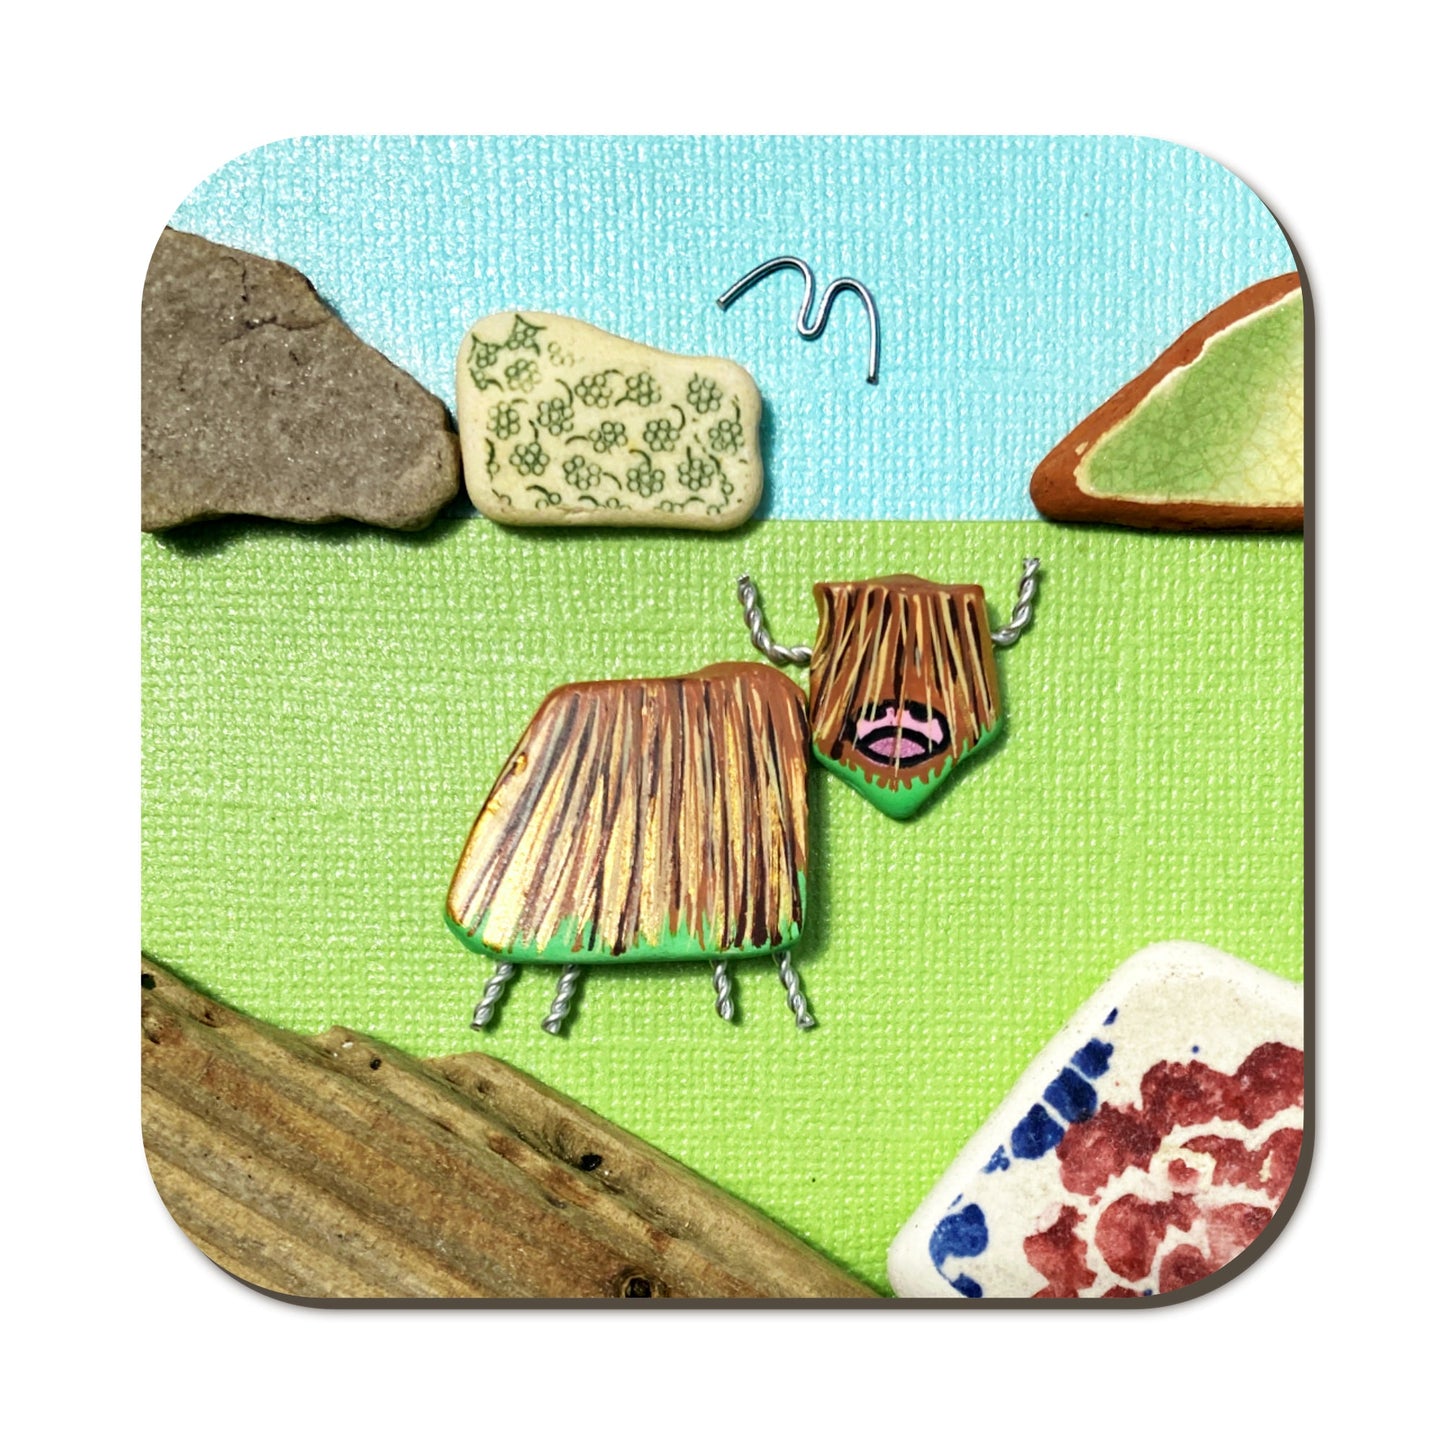 Coaster Set x 4 - Beach Pebble Art - Puffins, Seagulls, Highland Cows, Jellyfish - East Neuk Beach Crafts